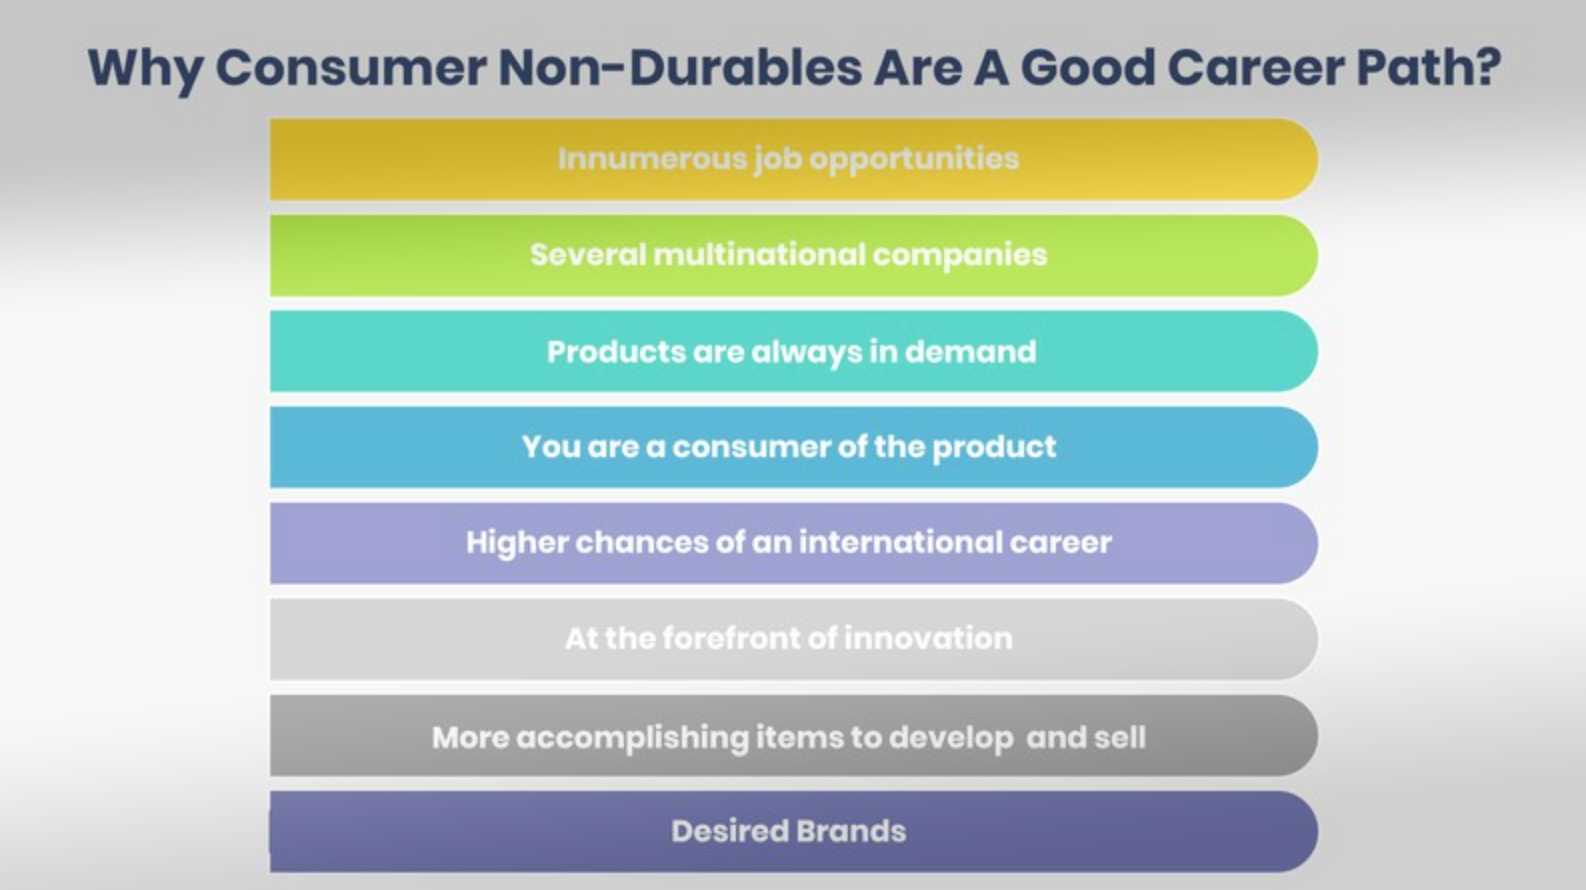 Is Consumer Non-Durables a Good Career Path